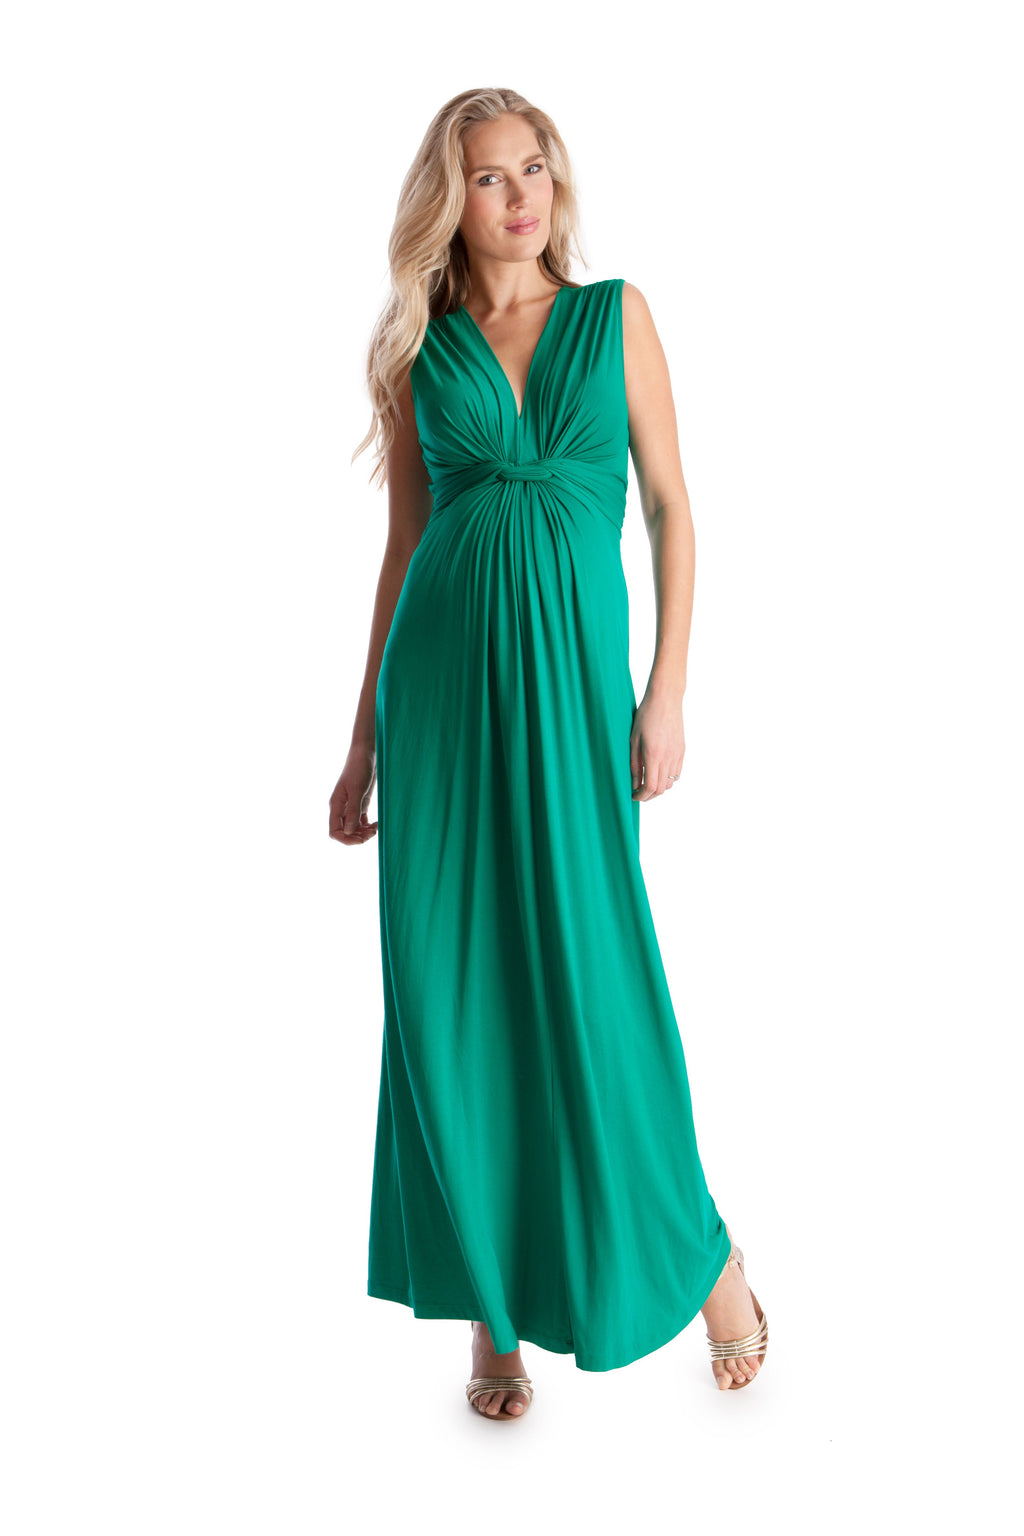 Seraphine, Dresses, Seraphine Maternity Knotted Front Jolene 34 Sleeve  Dark Green Dress Middleton